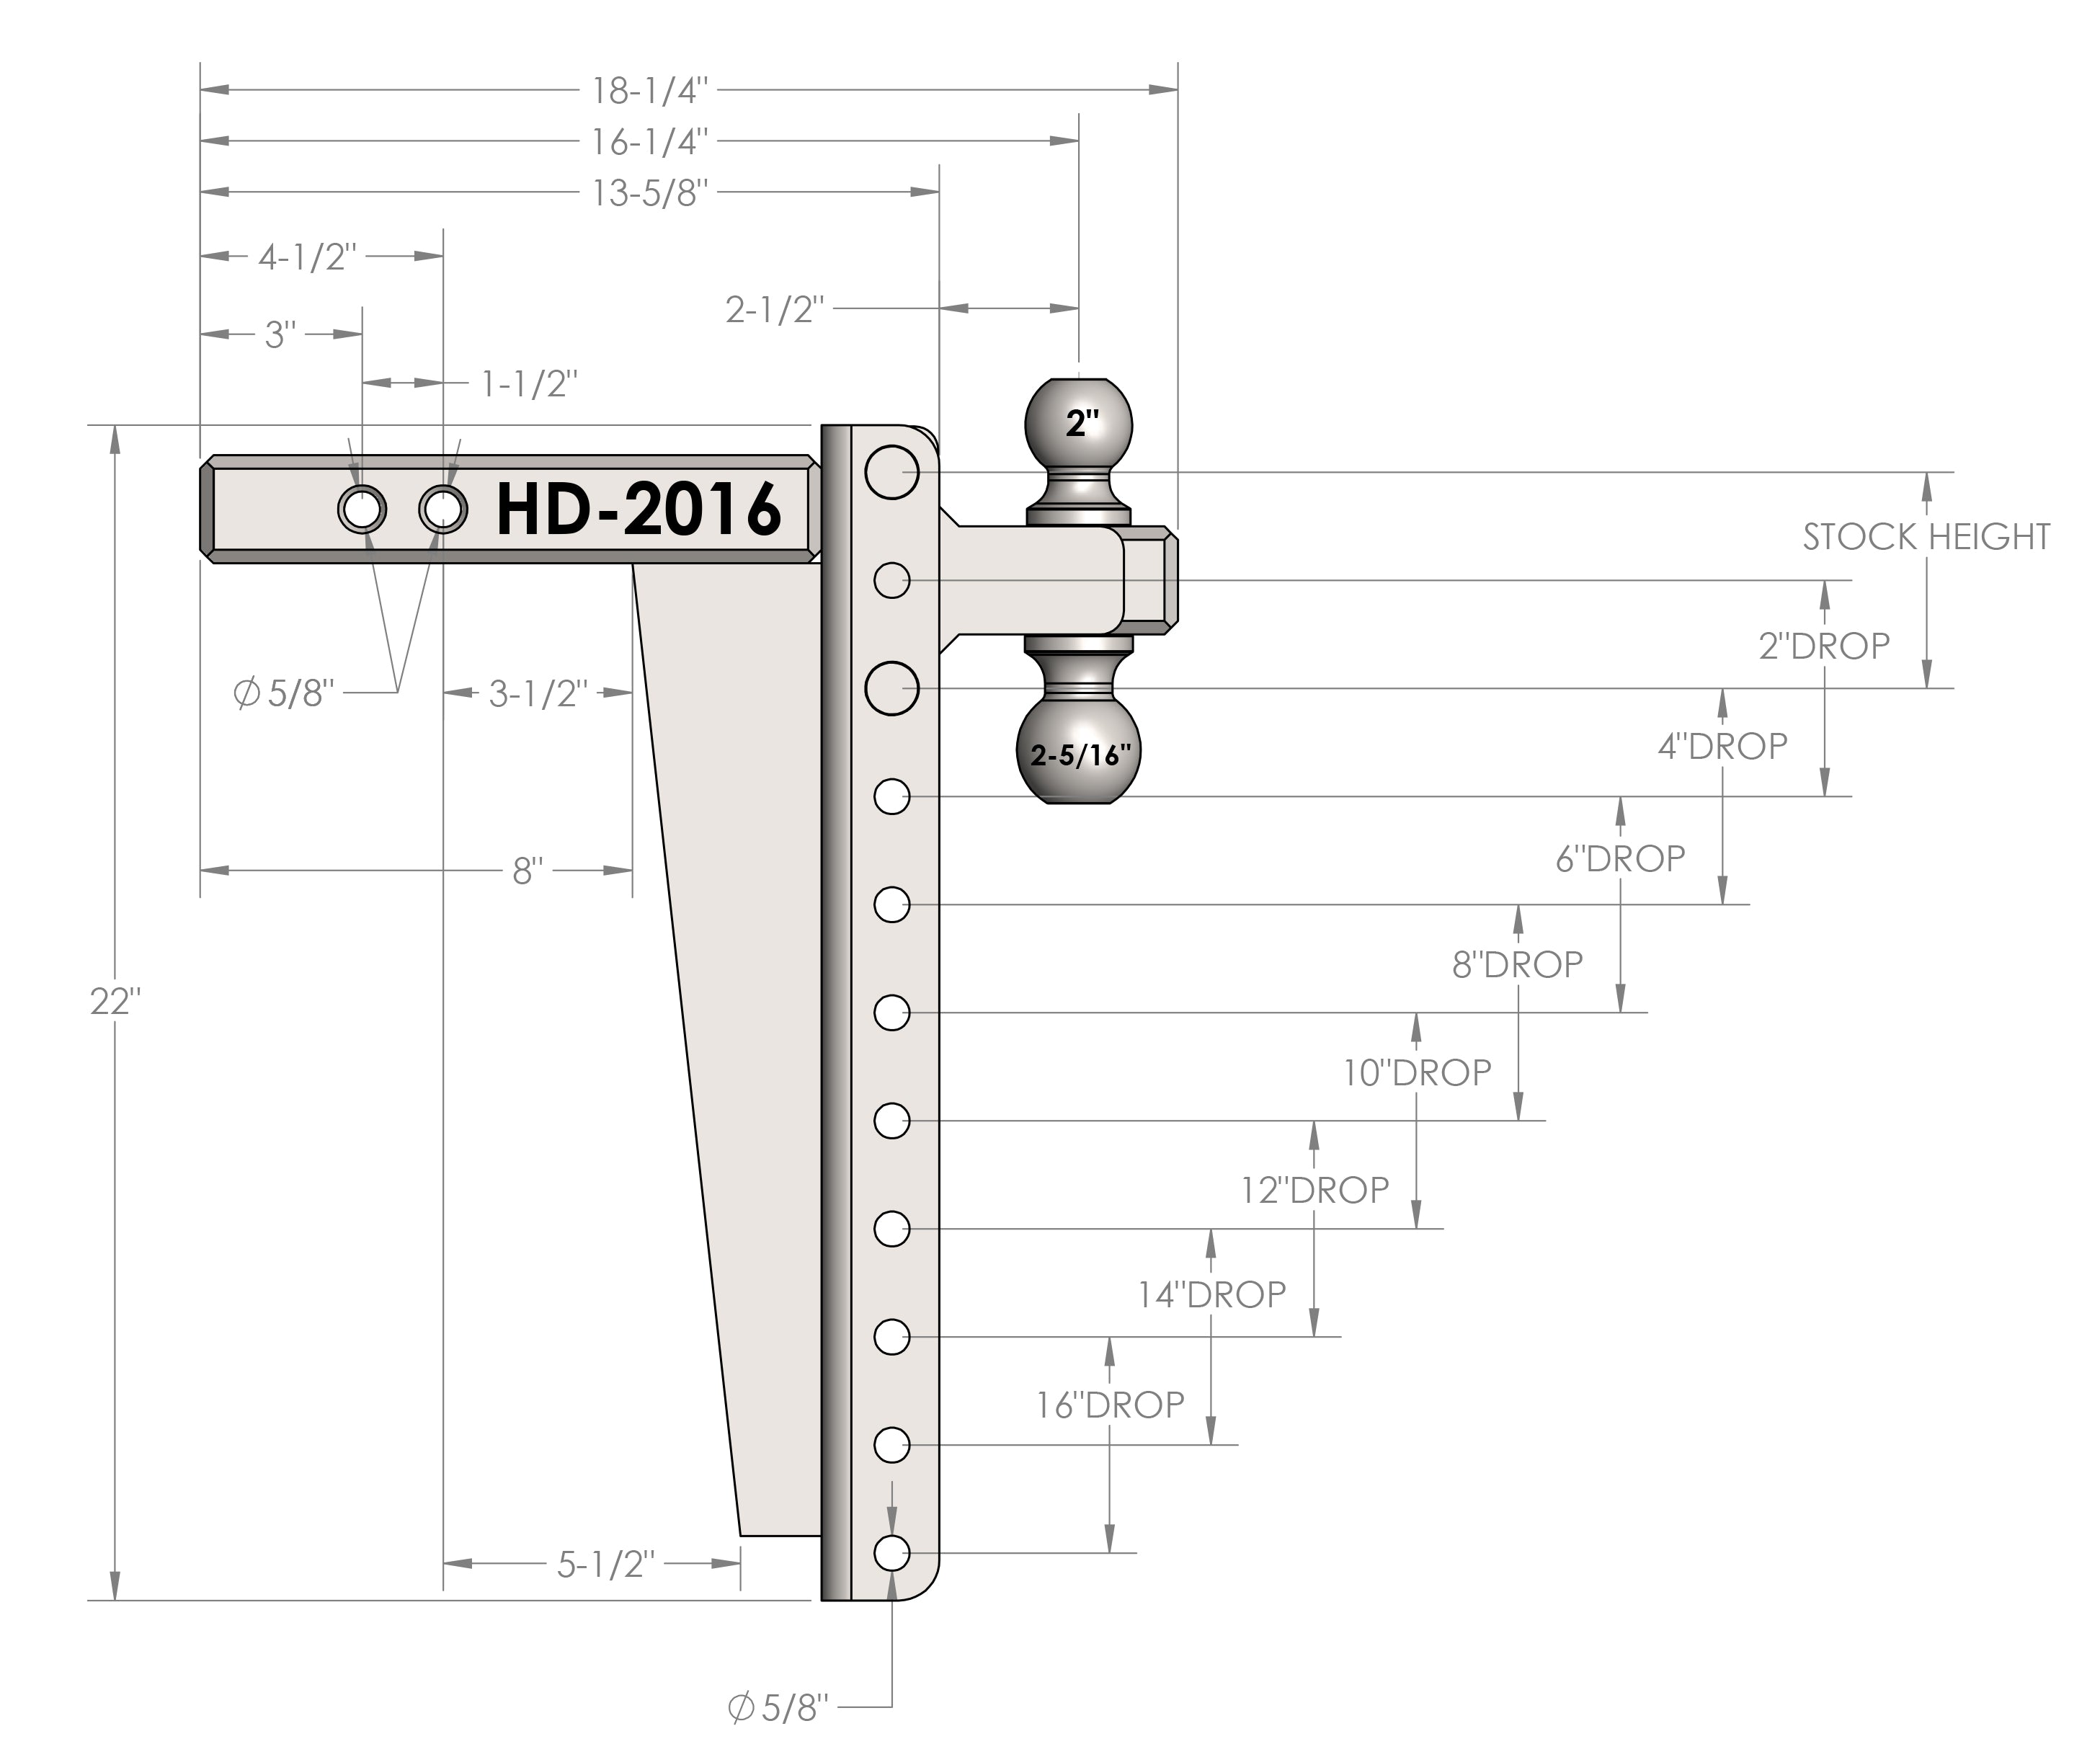 2.0" Heavy Duty 16" Drop/Rise Hitch Design Specification